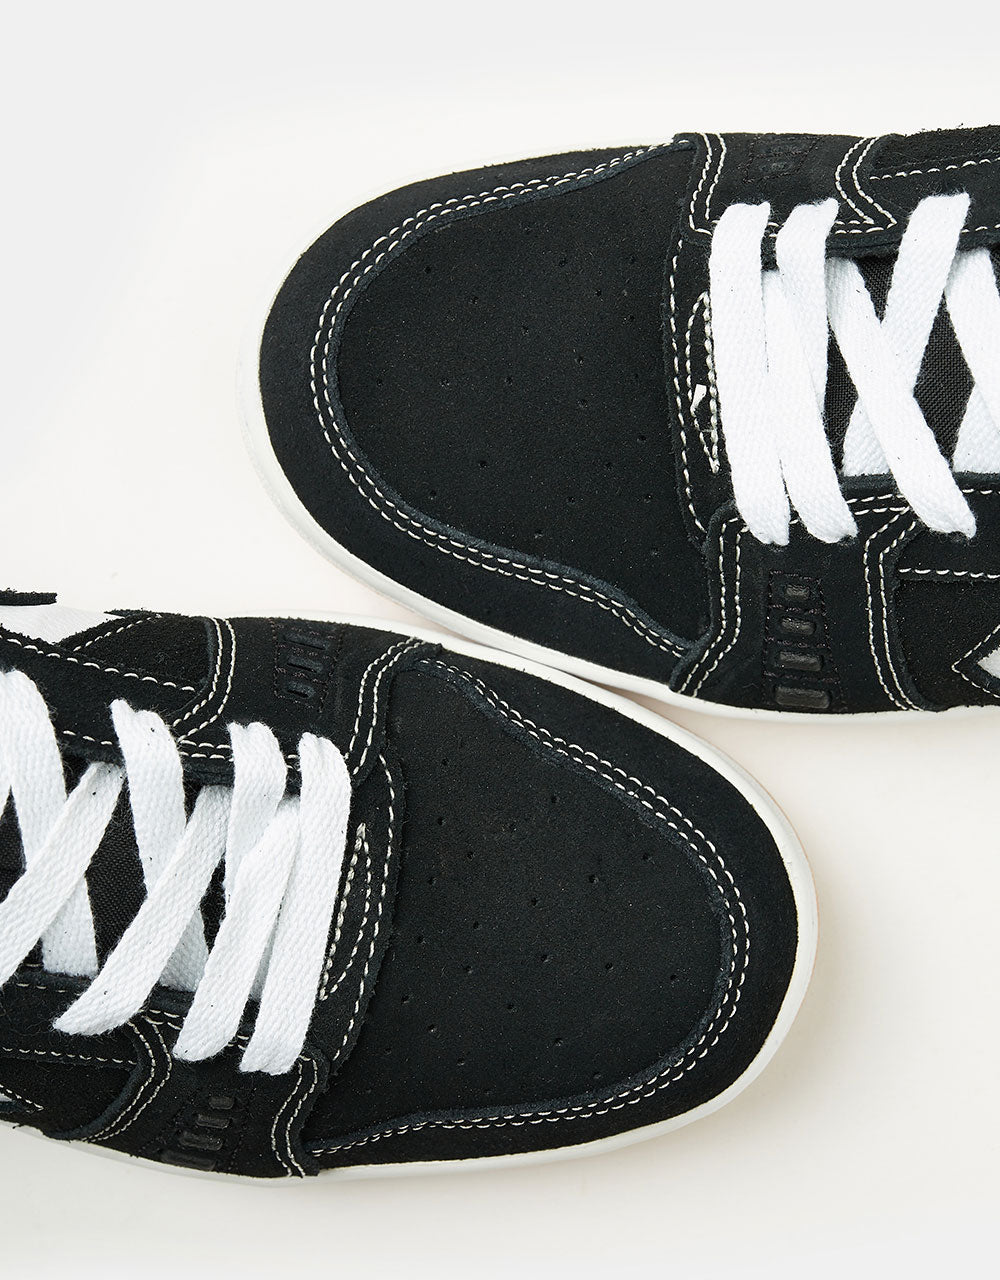 Converse AS-1 Pro Skate Shoes - Black/White/Gum